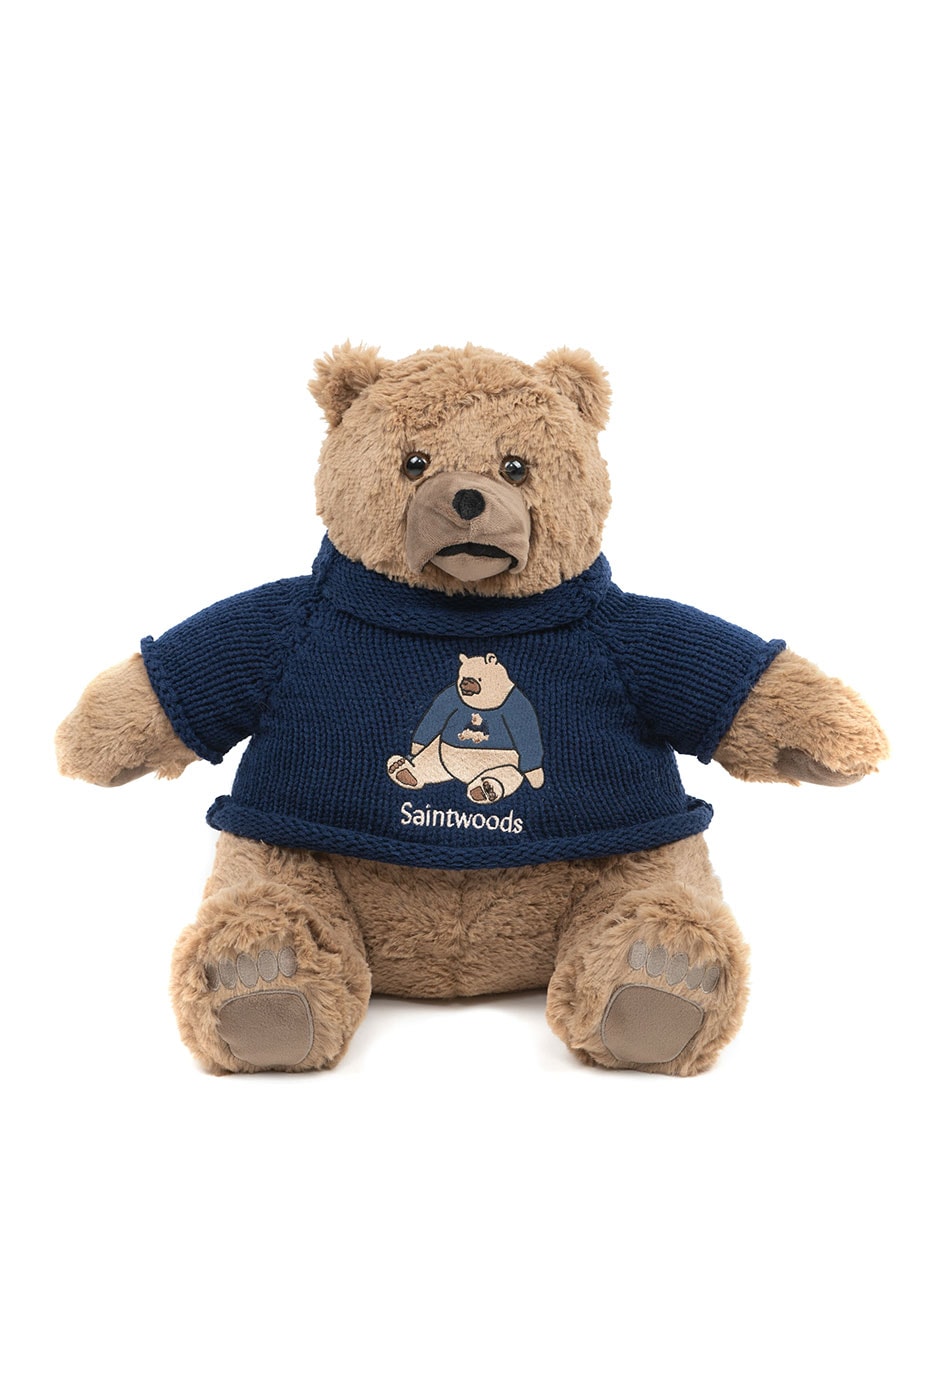 Saintwoods Paris Exclusives Collection Release Return PFW Info Fleece Hoodies Sweatpants Keychain Stuffed Bear